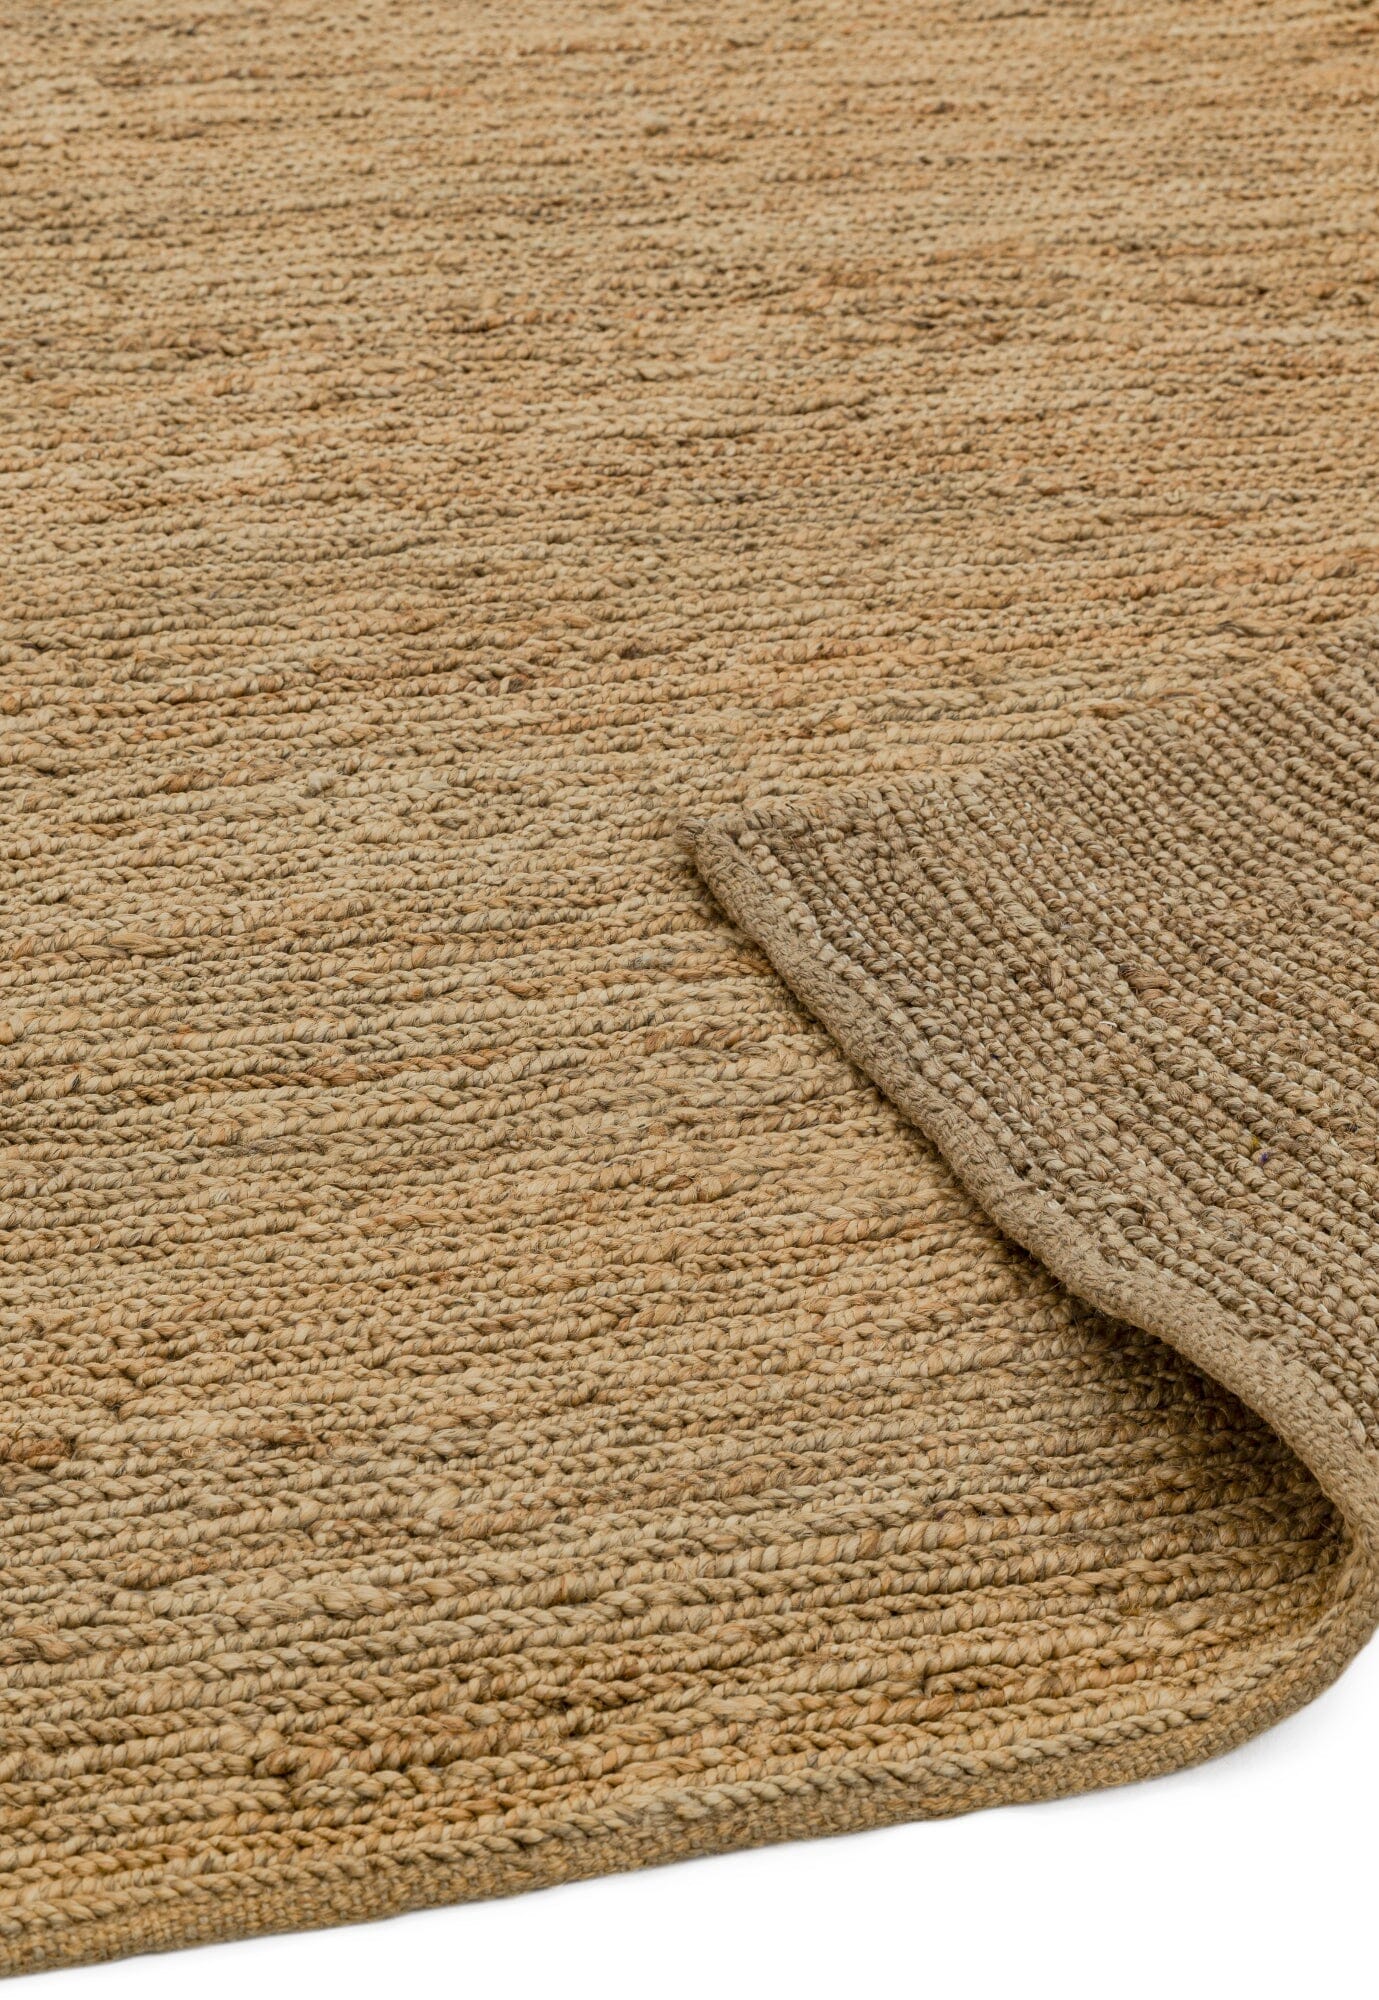  Asiatic Carpets-Asiatic Carpets Soumak Hand Woven Rug Natural - 160 x 230cm-Beige, Natural 629 